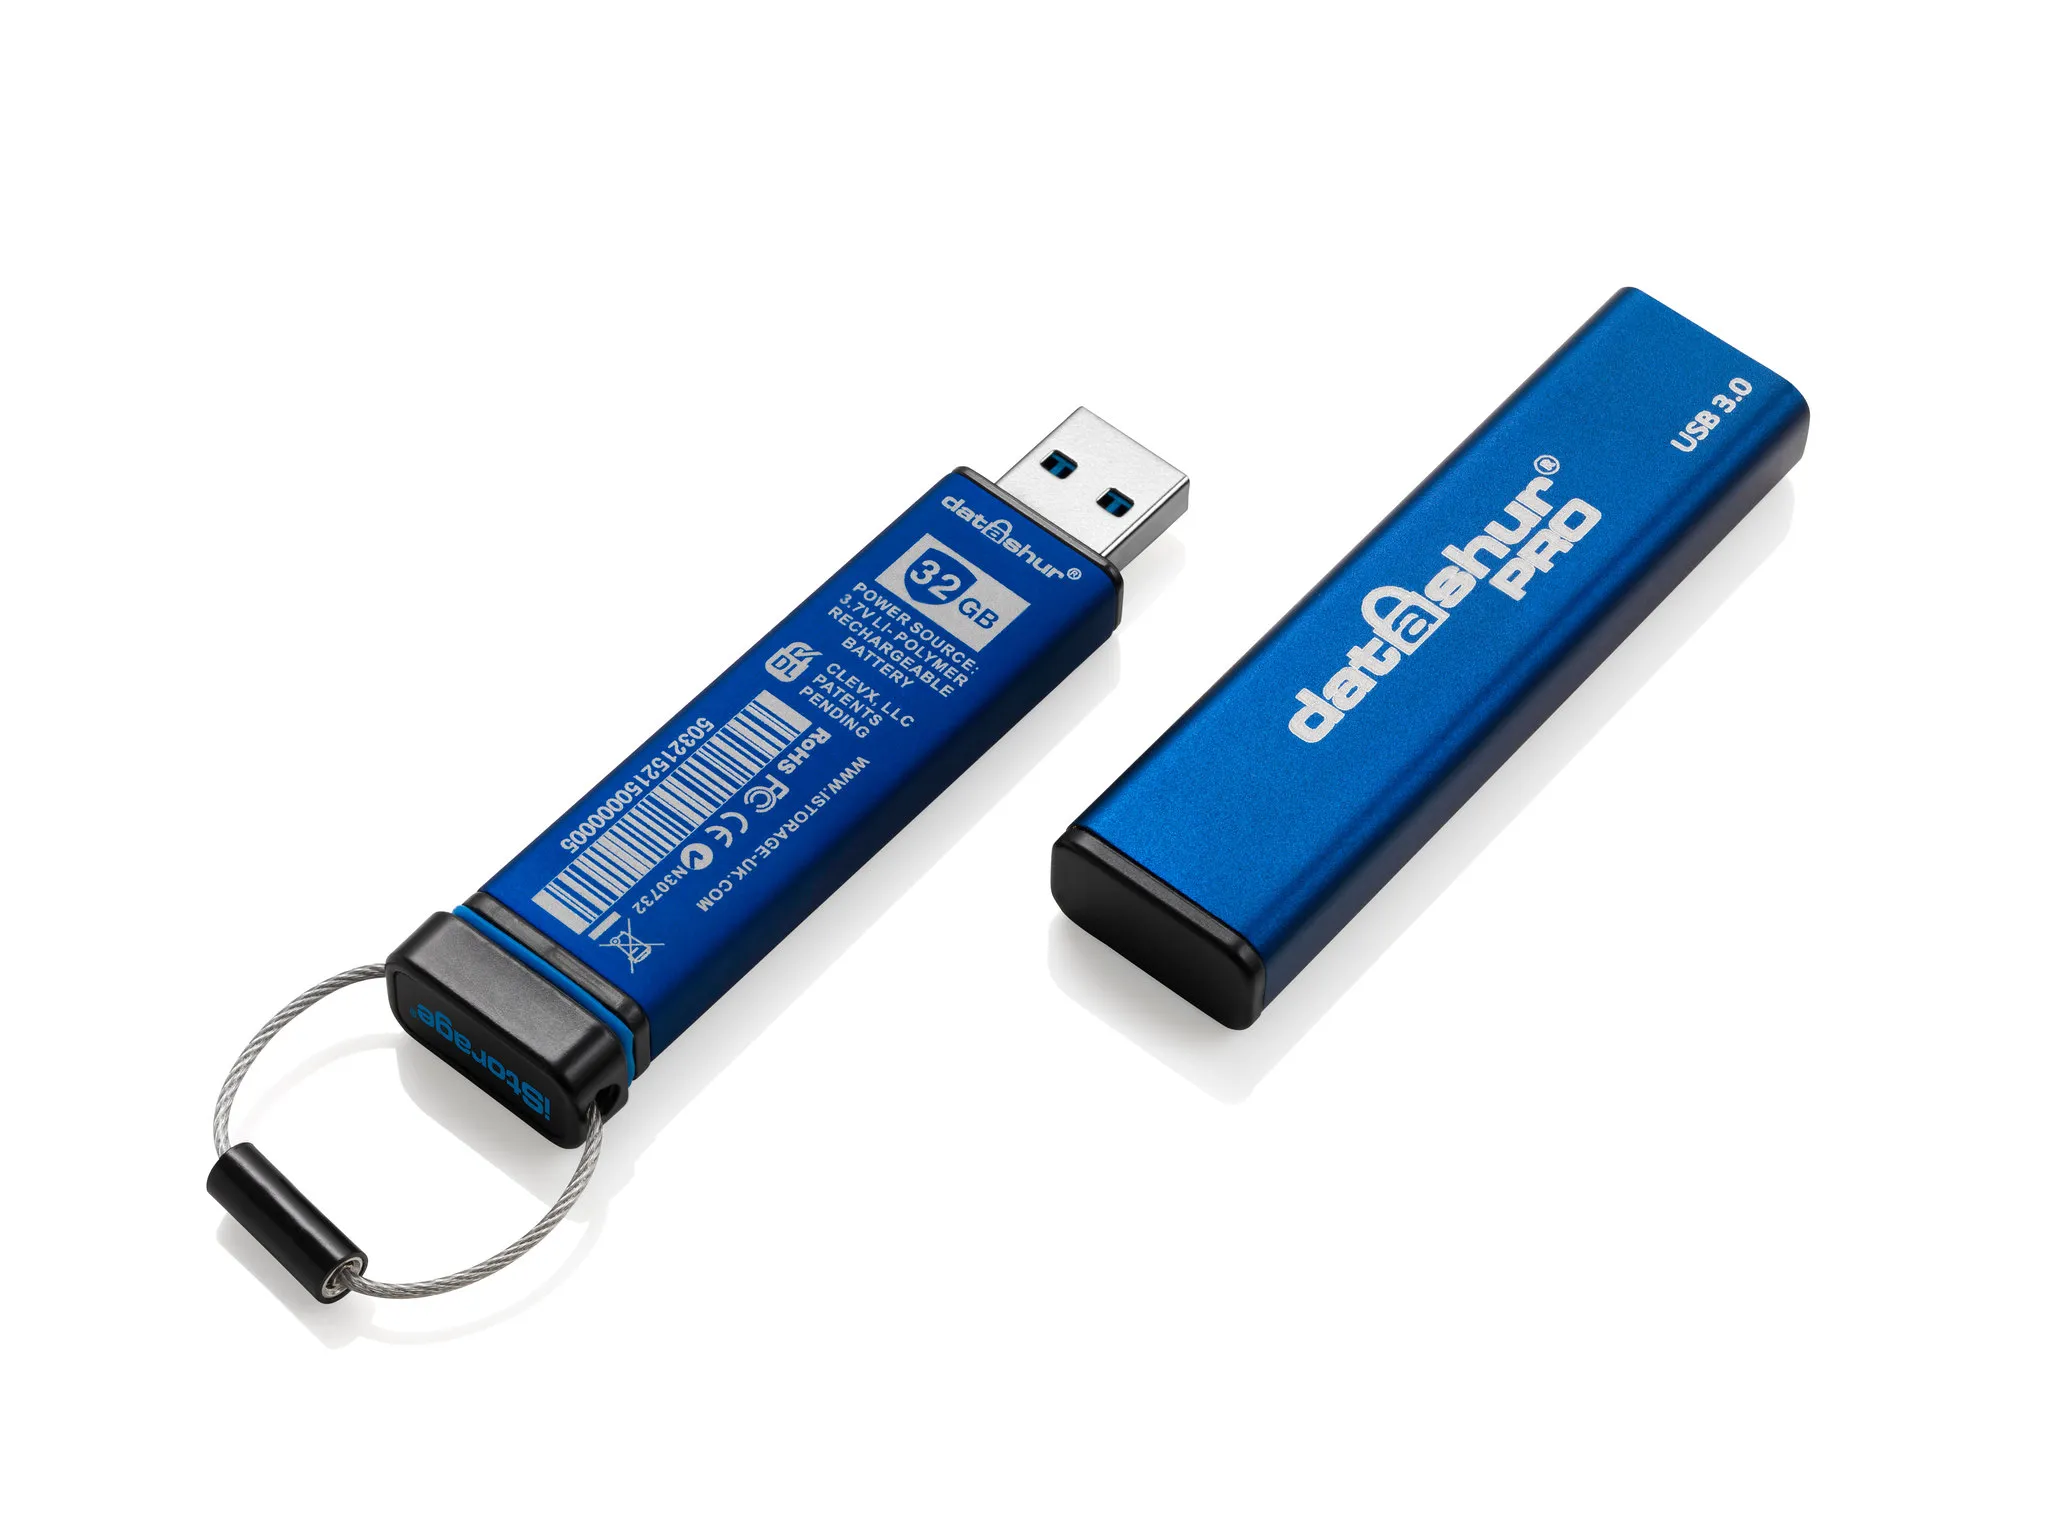 Vente iStorage datAshur Pro USB3 256-bit 64GB iStorage au meilleur prix - visuel 8